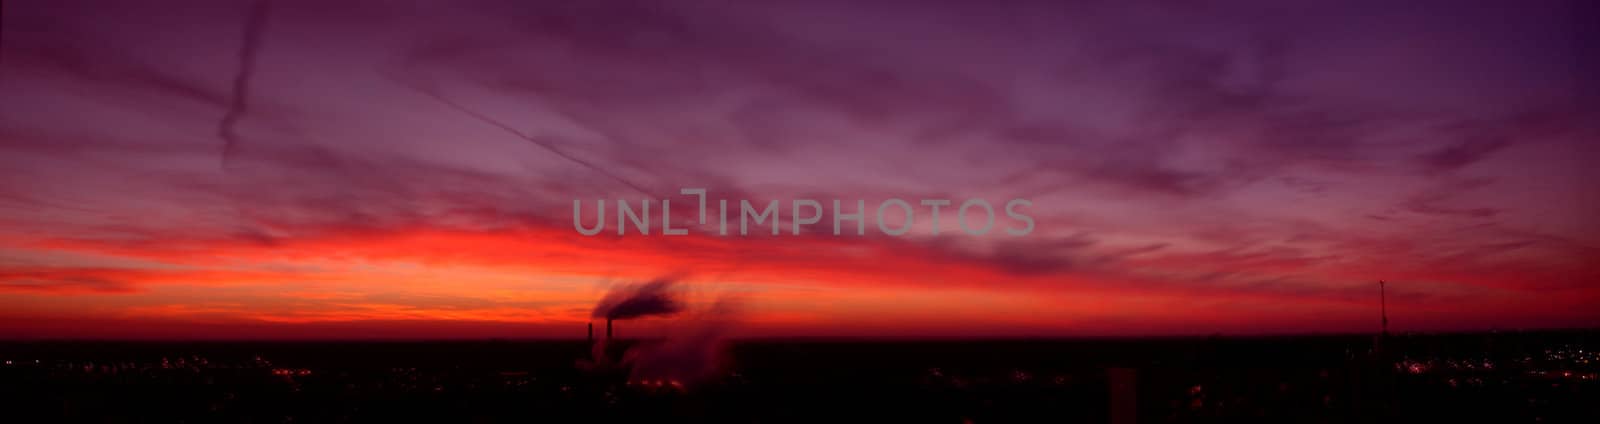 Champaign, IL view at dusk.